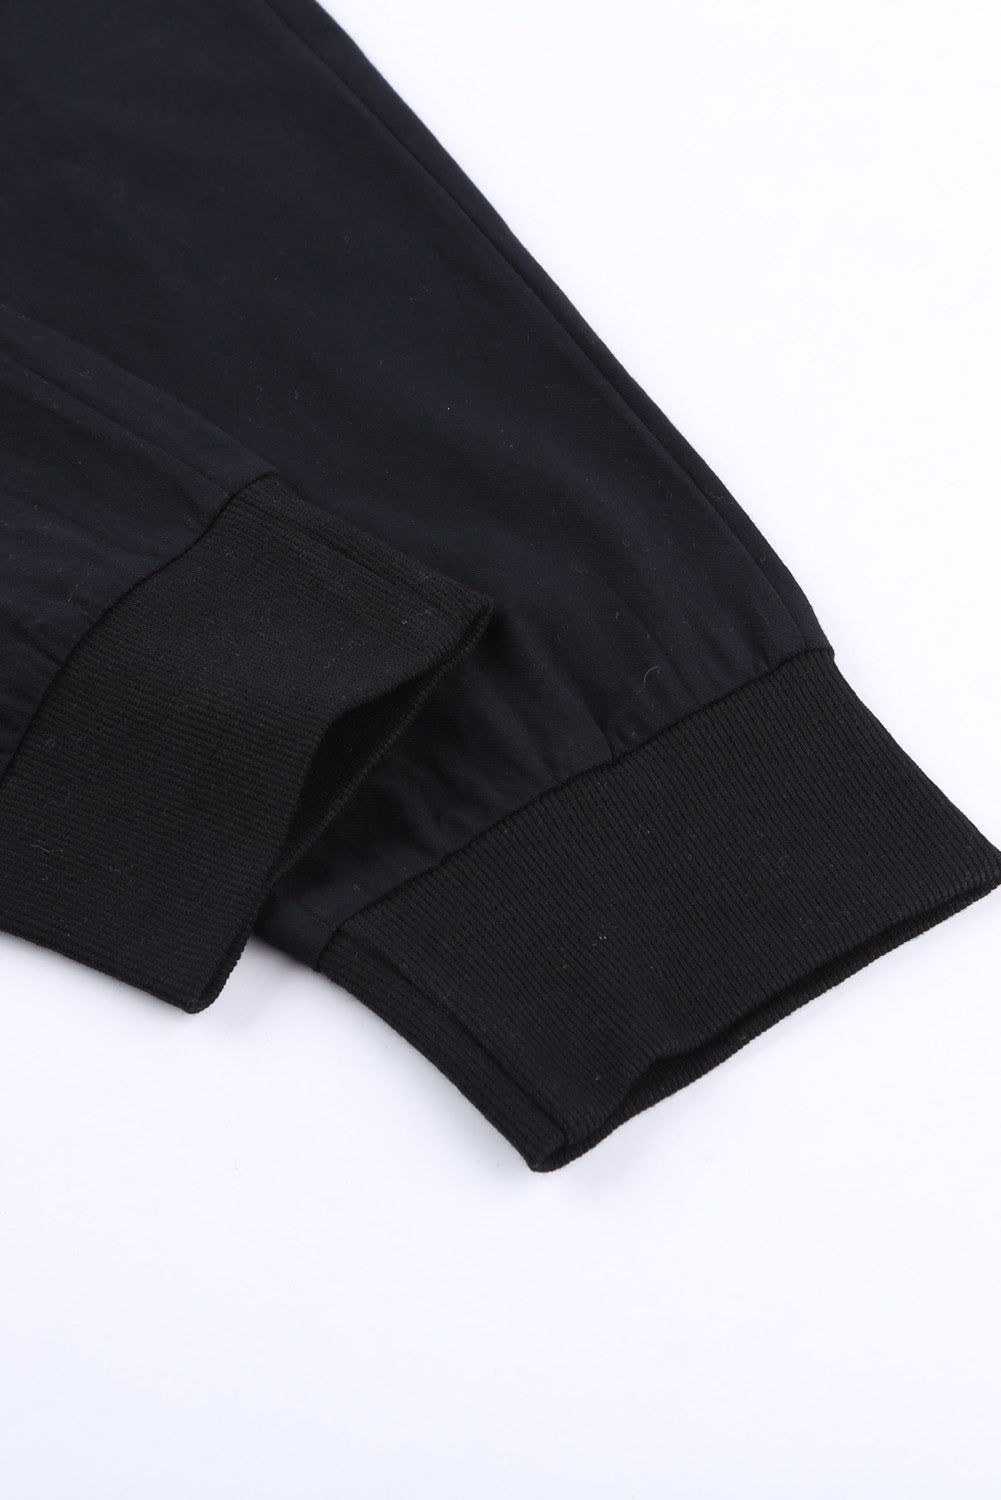 Black Causal Pockets Pants - SELFTRITSS